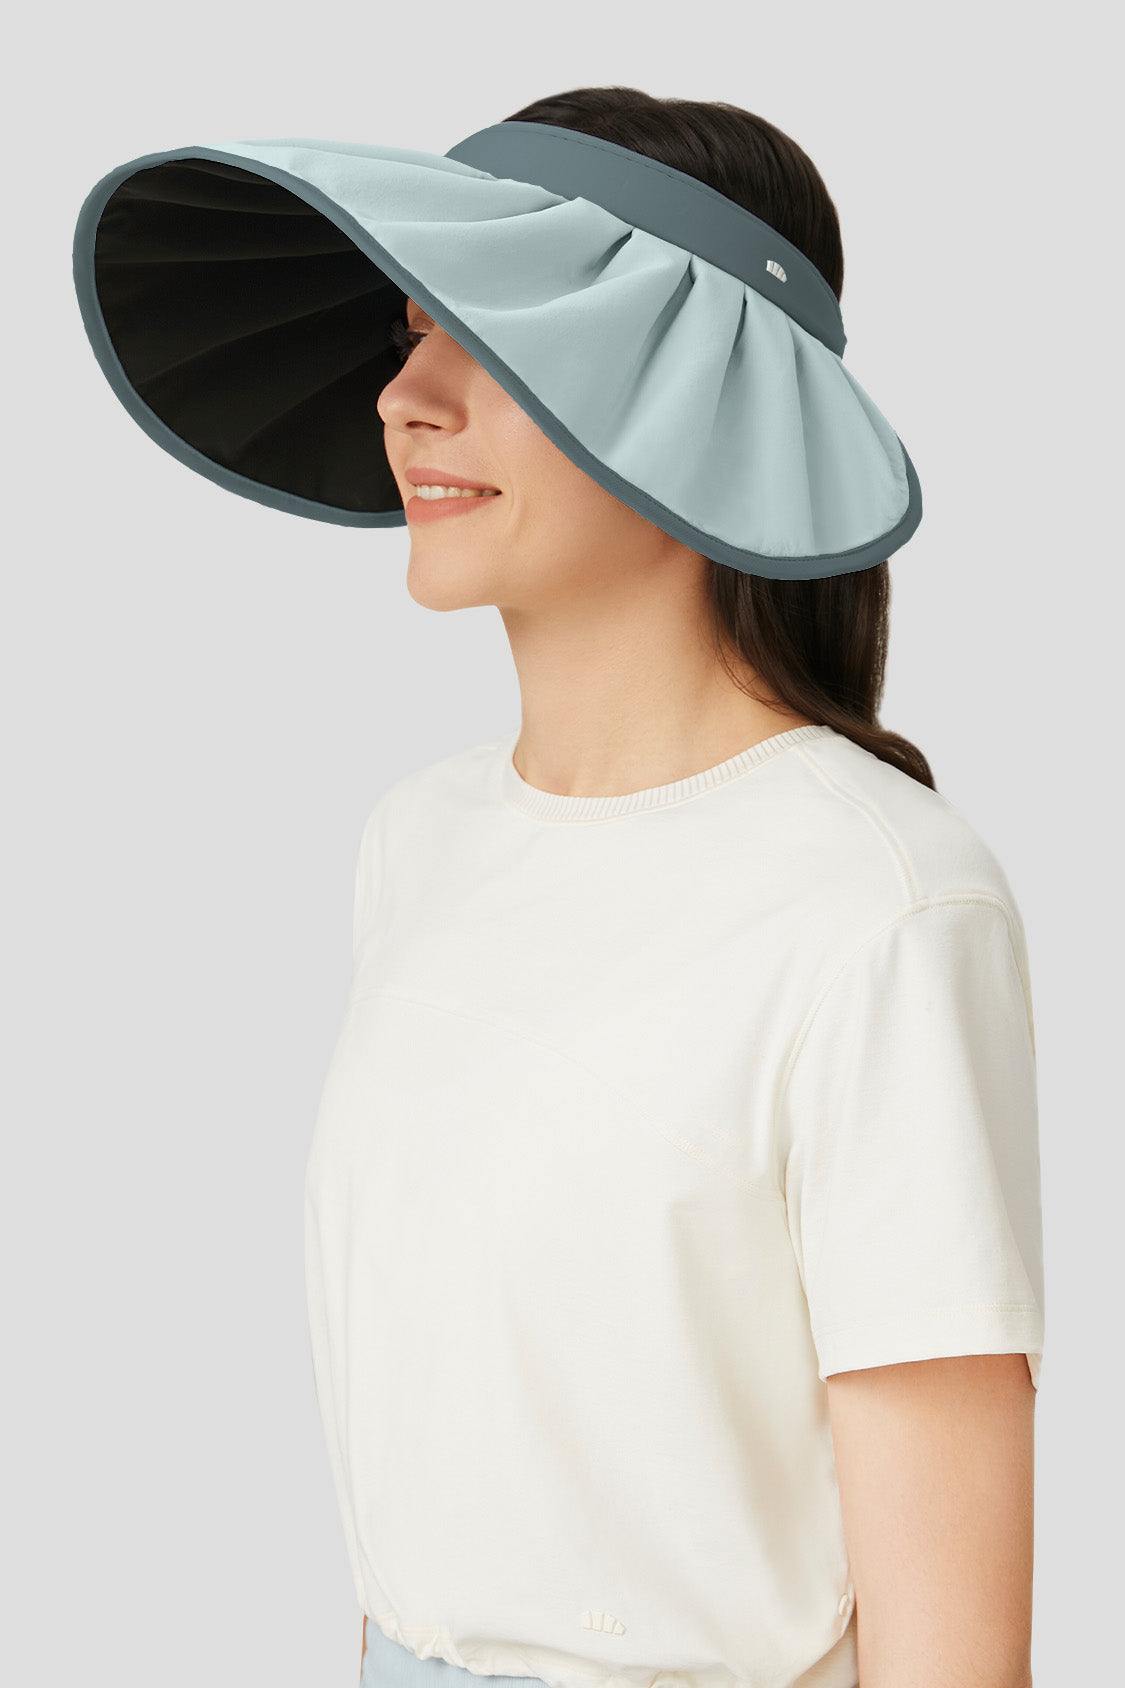 Sun Protection Hat for Women, Beneunder UPF50+ Packable Wide Brim UV Protection Sun Visor Hat Nordic Gray / One Size - Adjustable 55-58cm